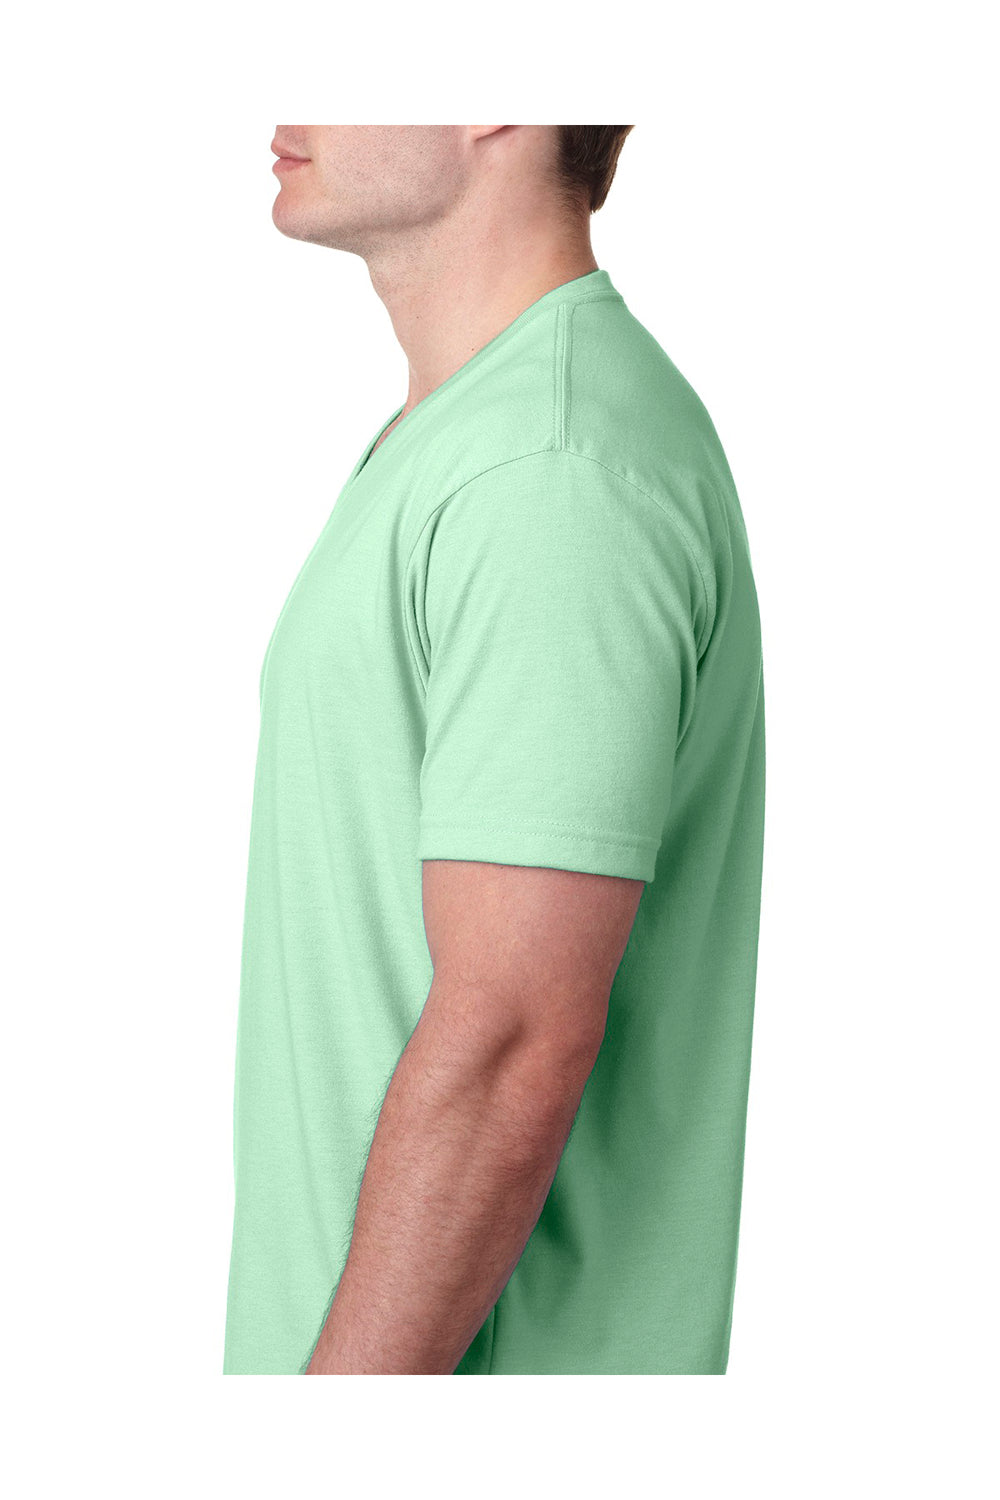 Next Level 6240 Mens CVC Jersey Short Sleeve V-Neck T-Shirt Mint Green Side